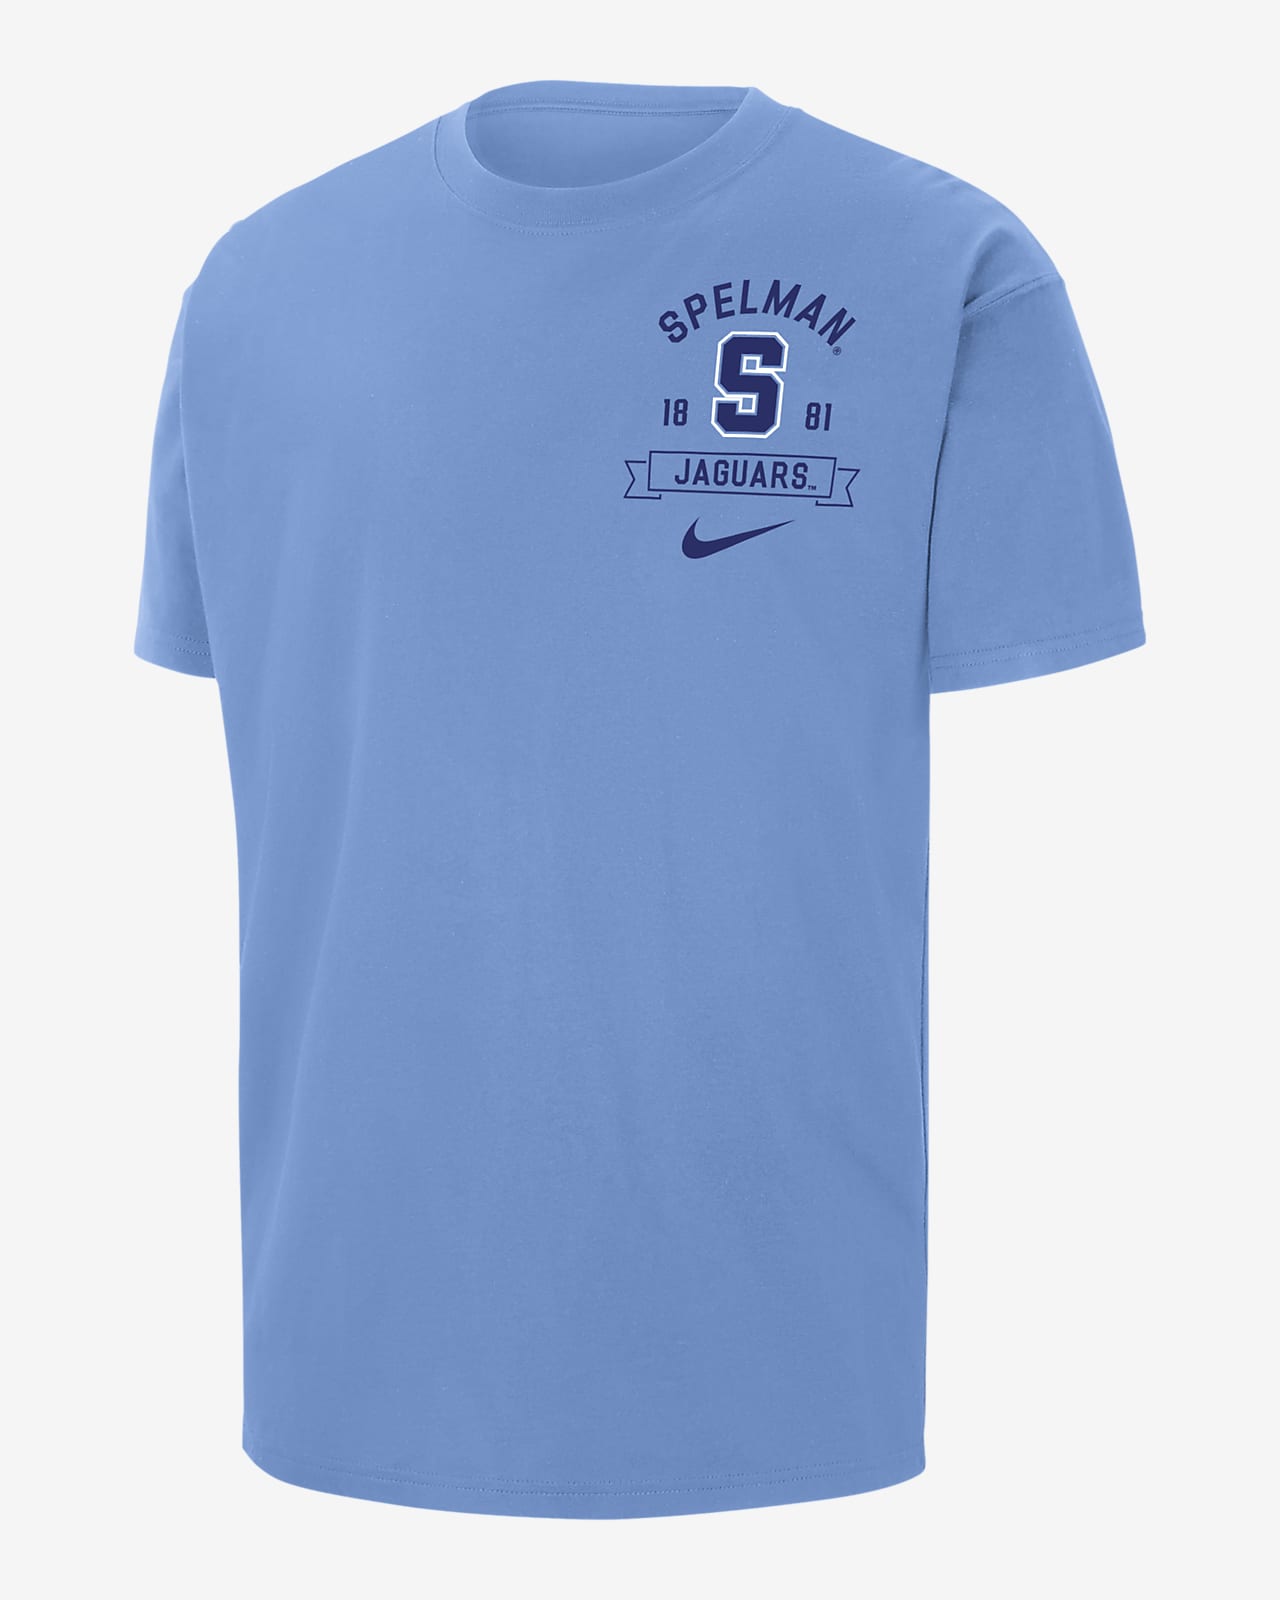 Spelman Max90 Men's Nike College T-Shirt